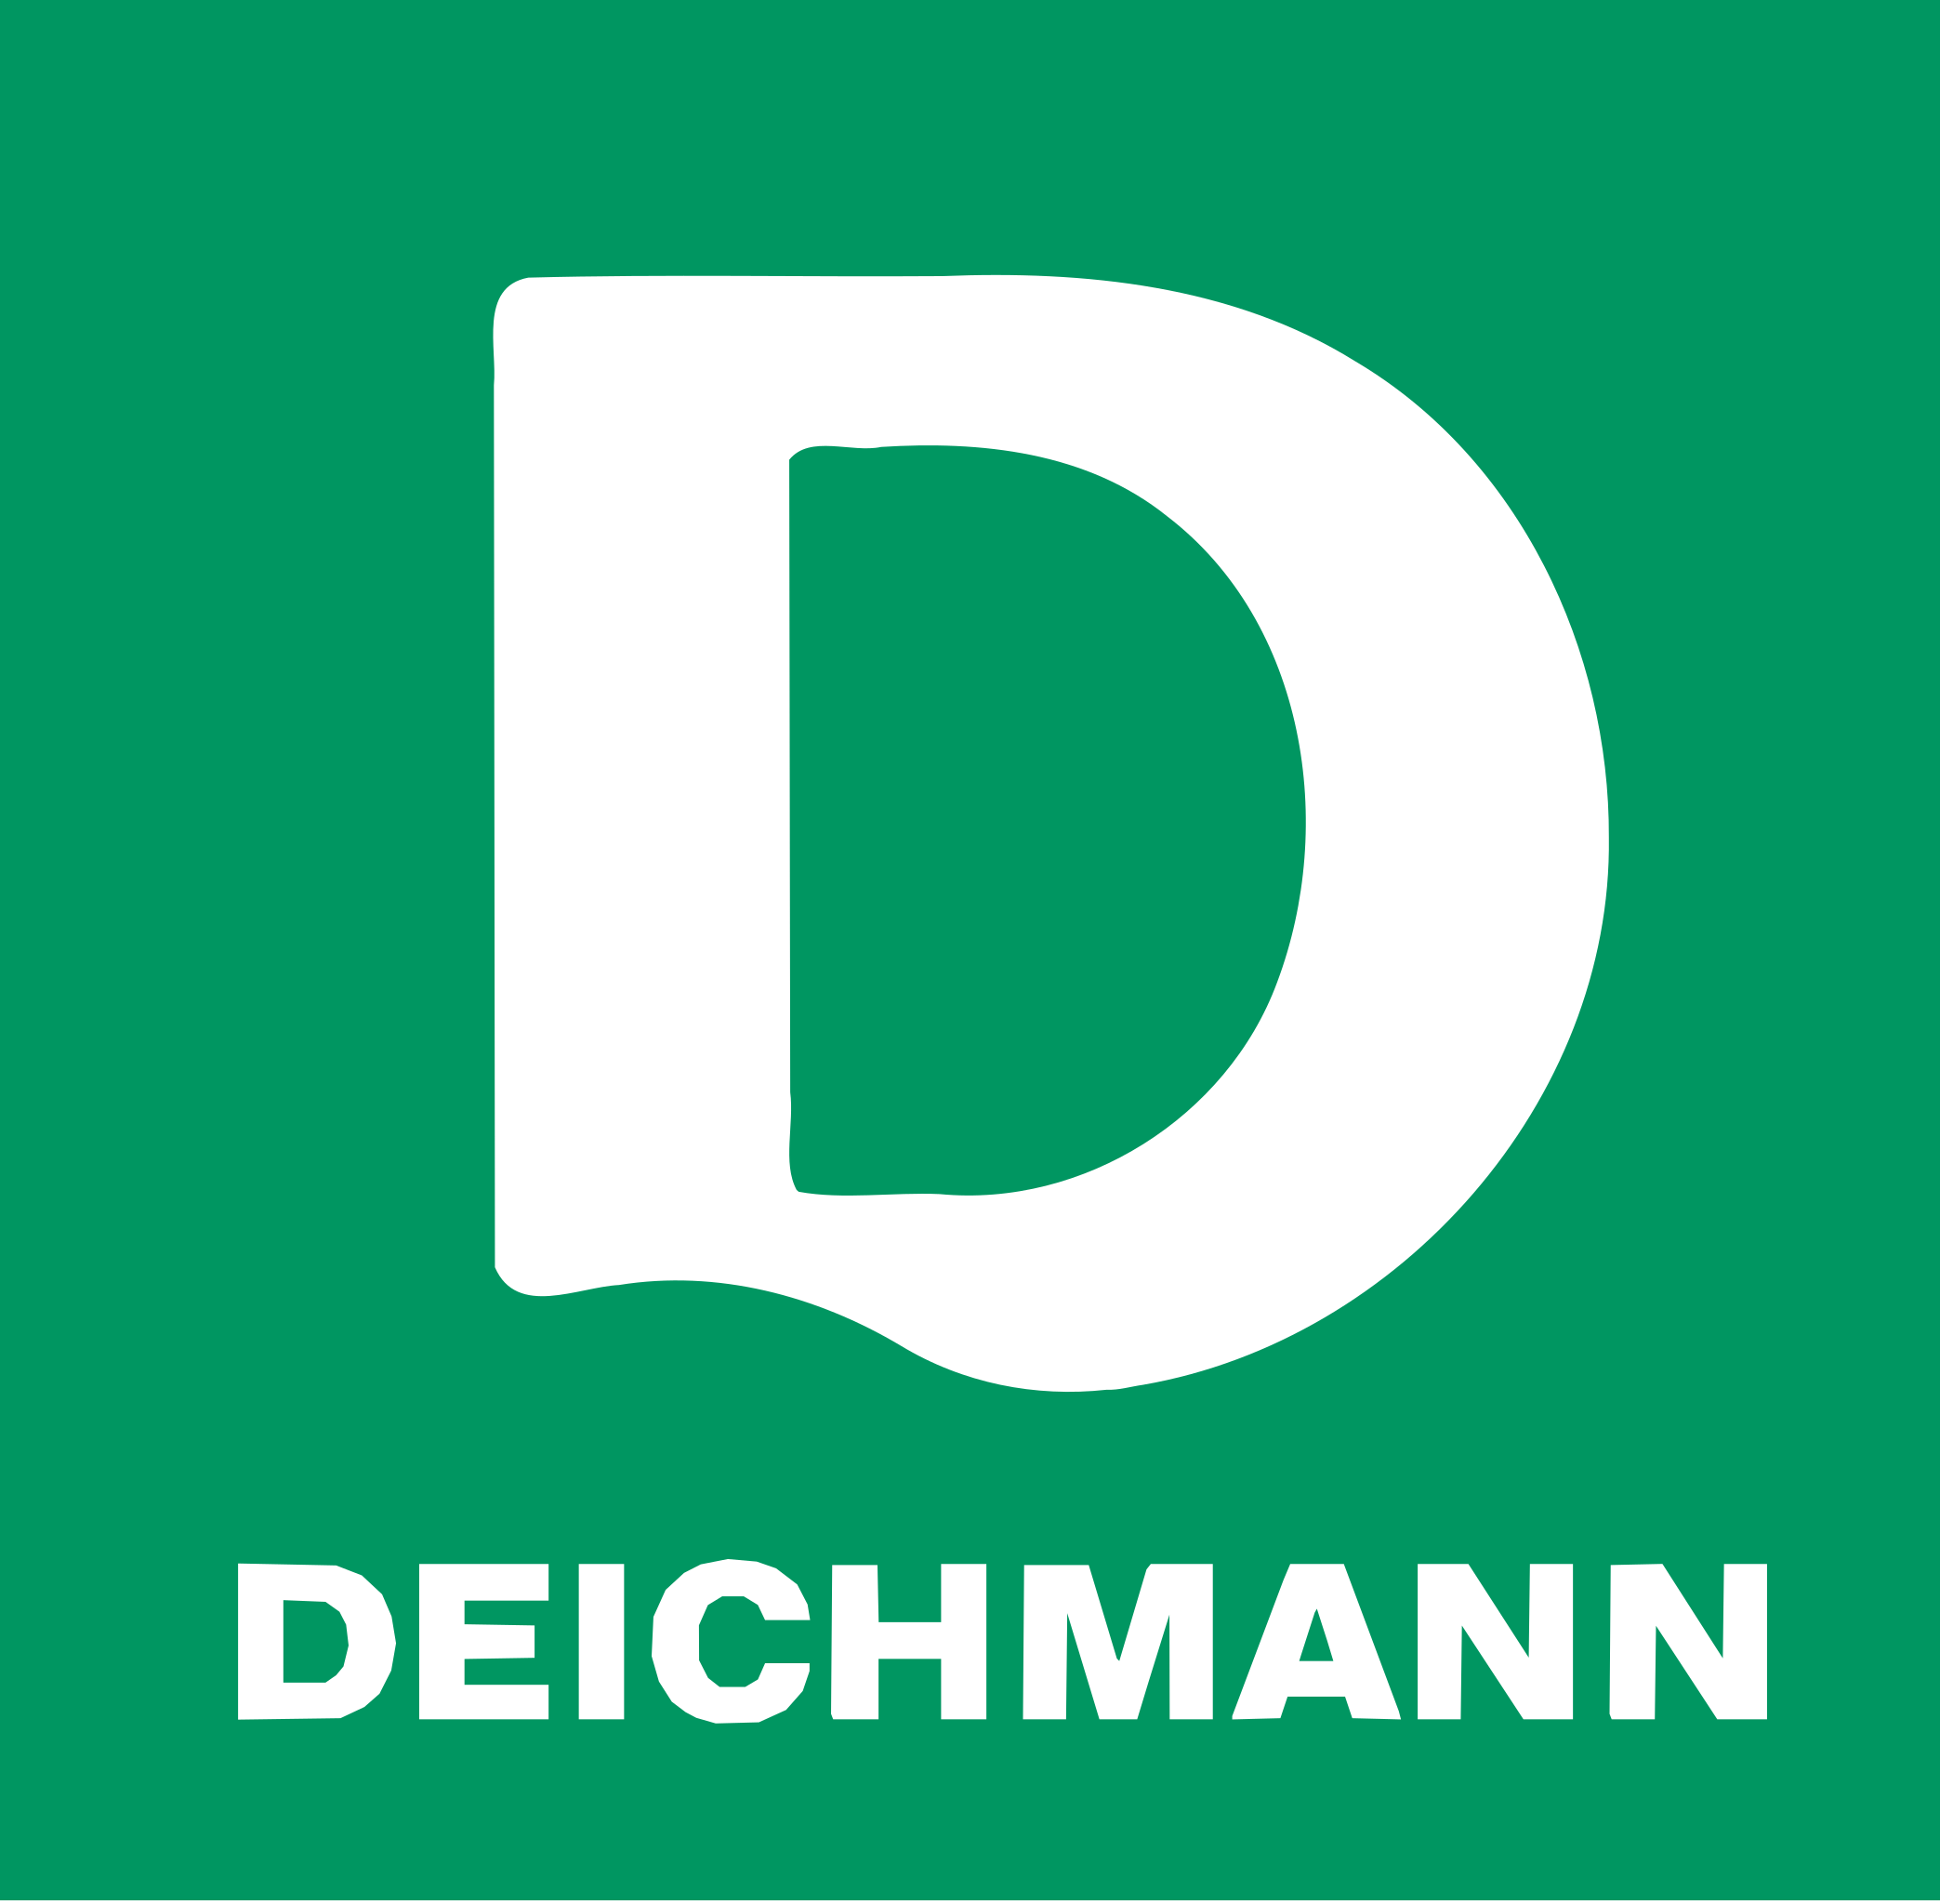 Deichmann logo.svg